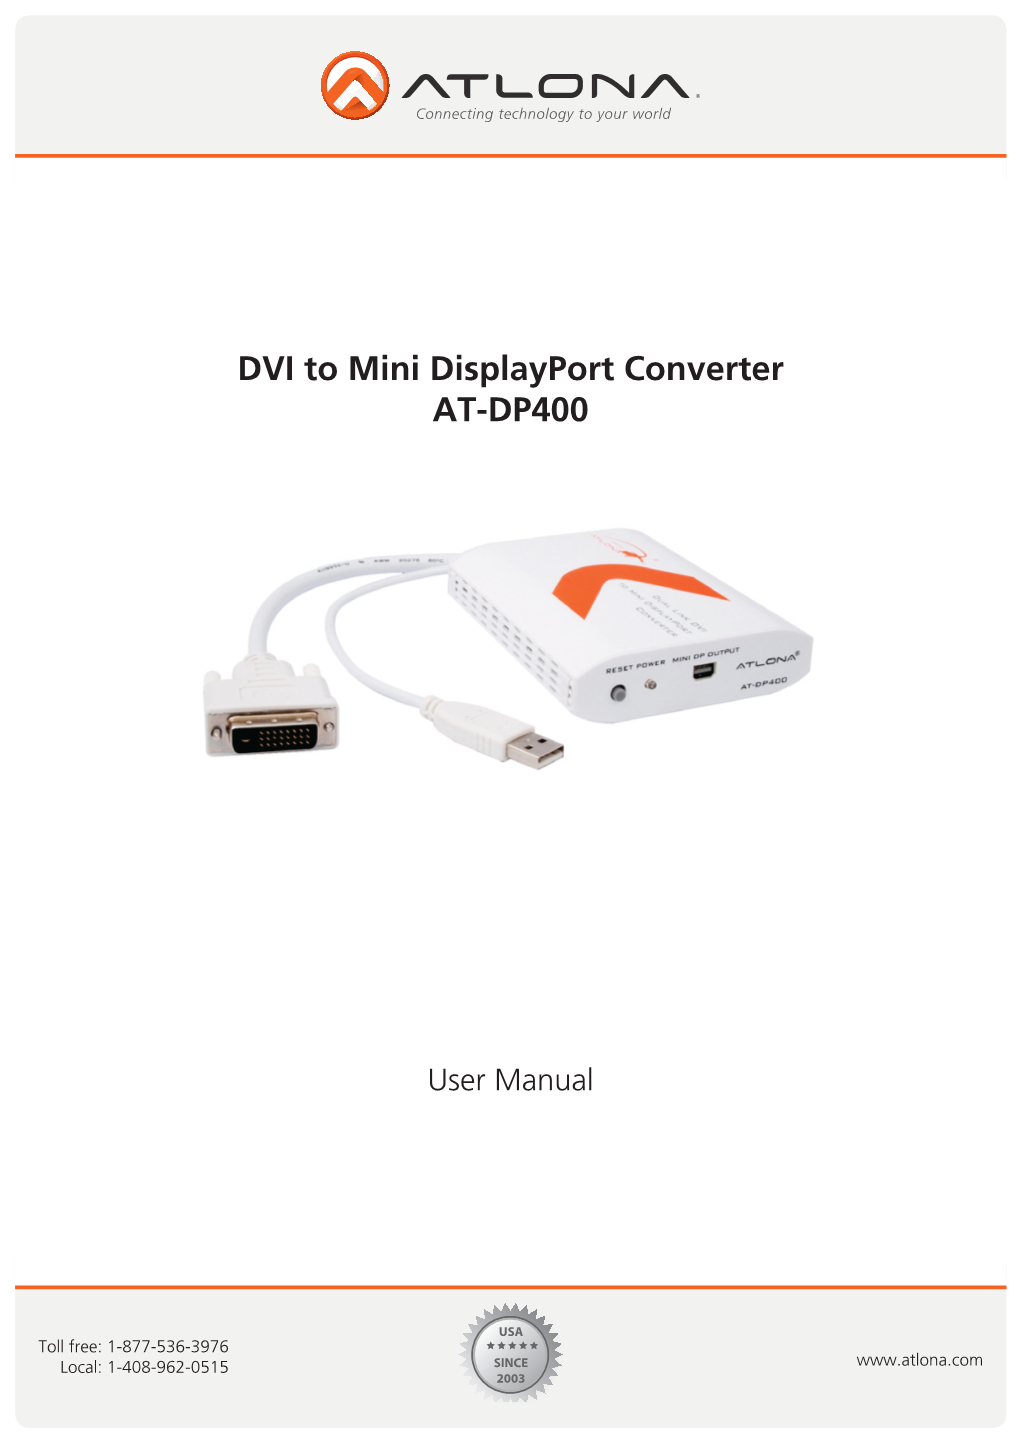 DVI to Mini Displayport Converter AT-DP400